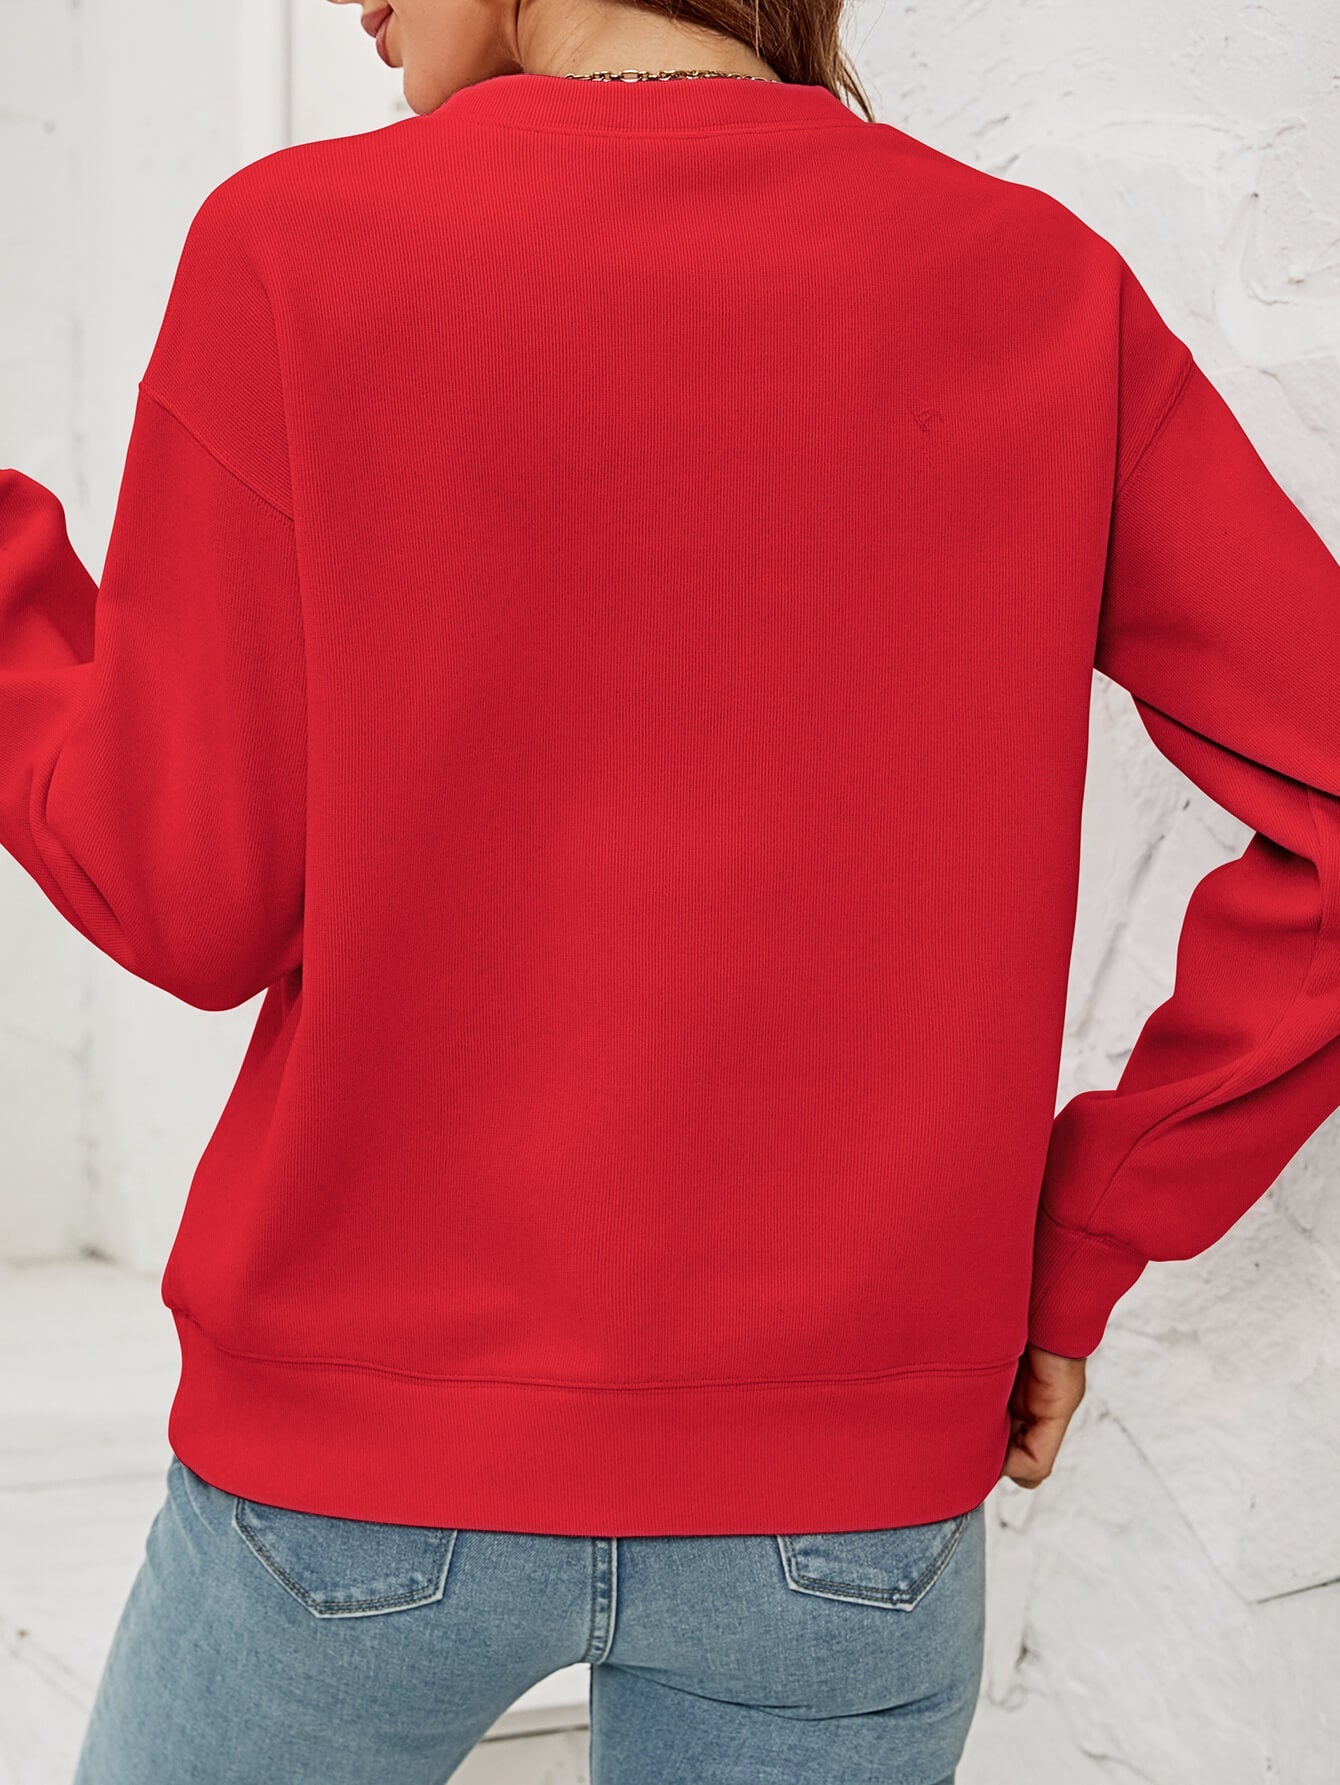 Mimi Clause Polka Dot Graphic Dropped Shoulder Sweatshirt